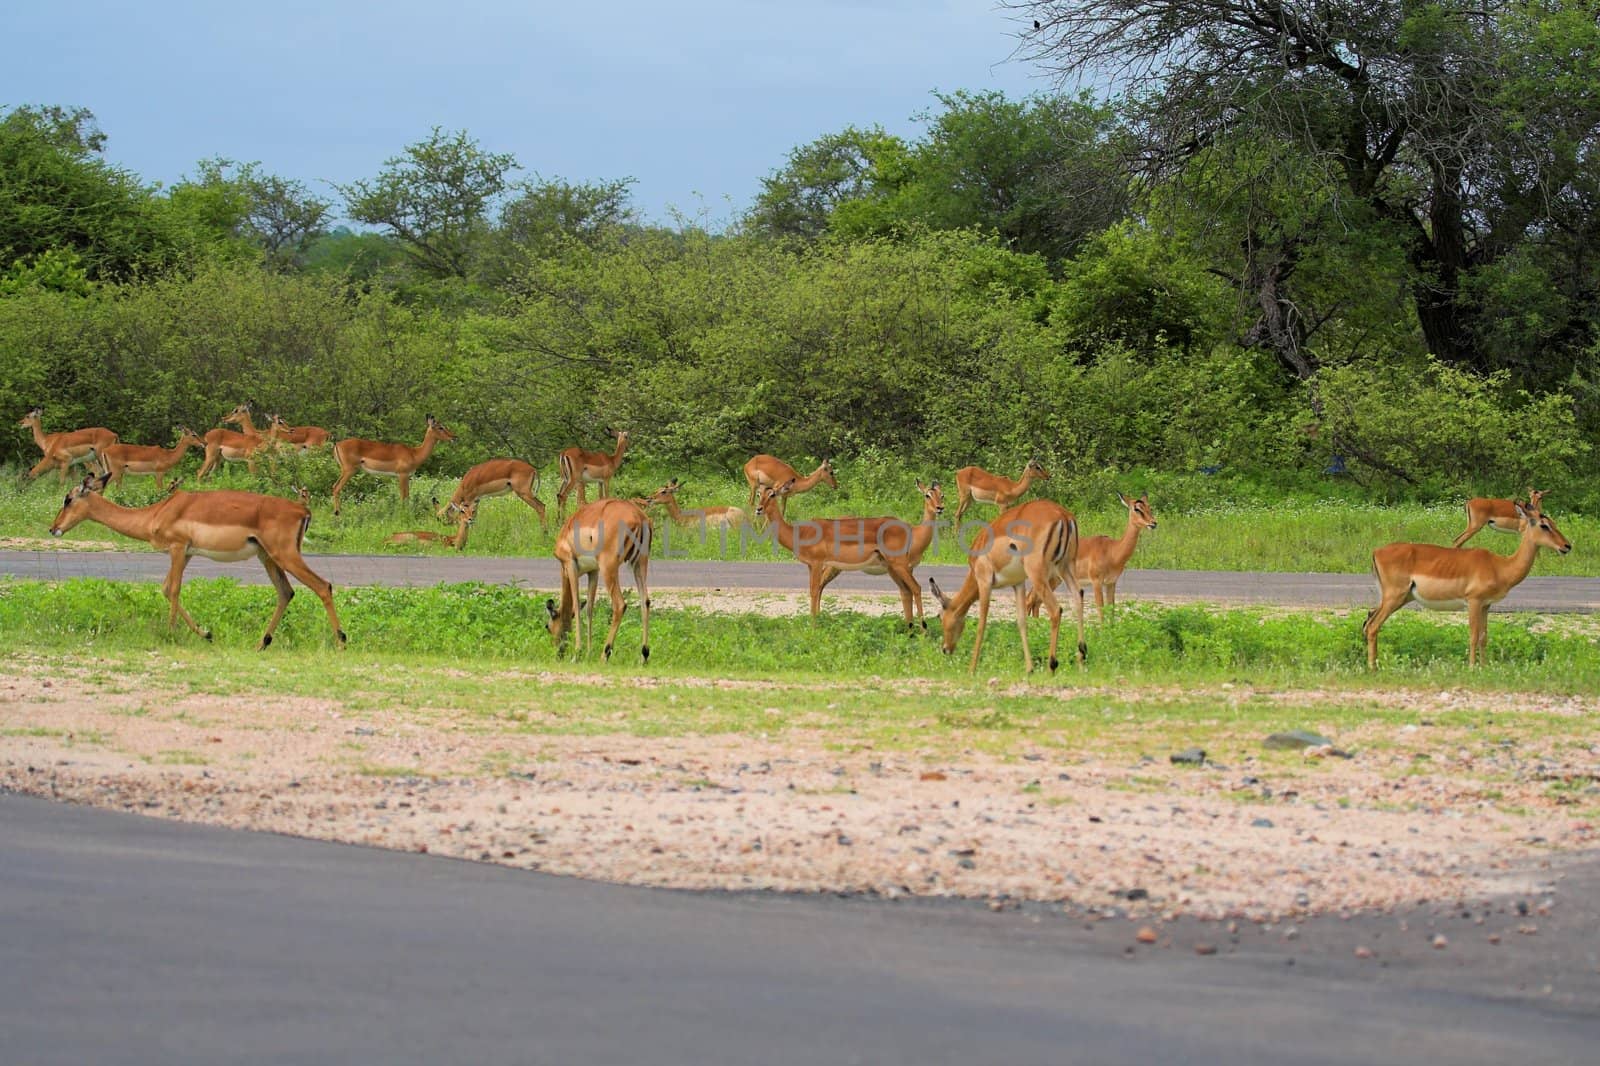 Impala gazelle feeding next to the road by nightowlza